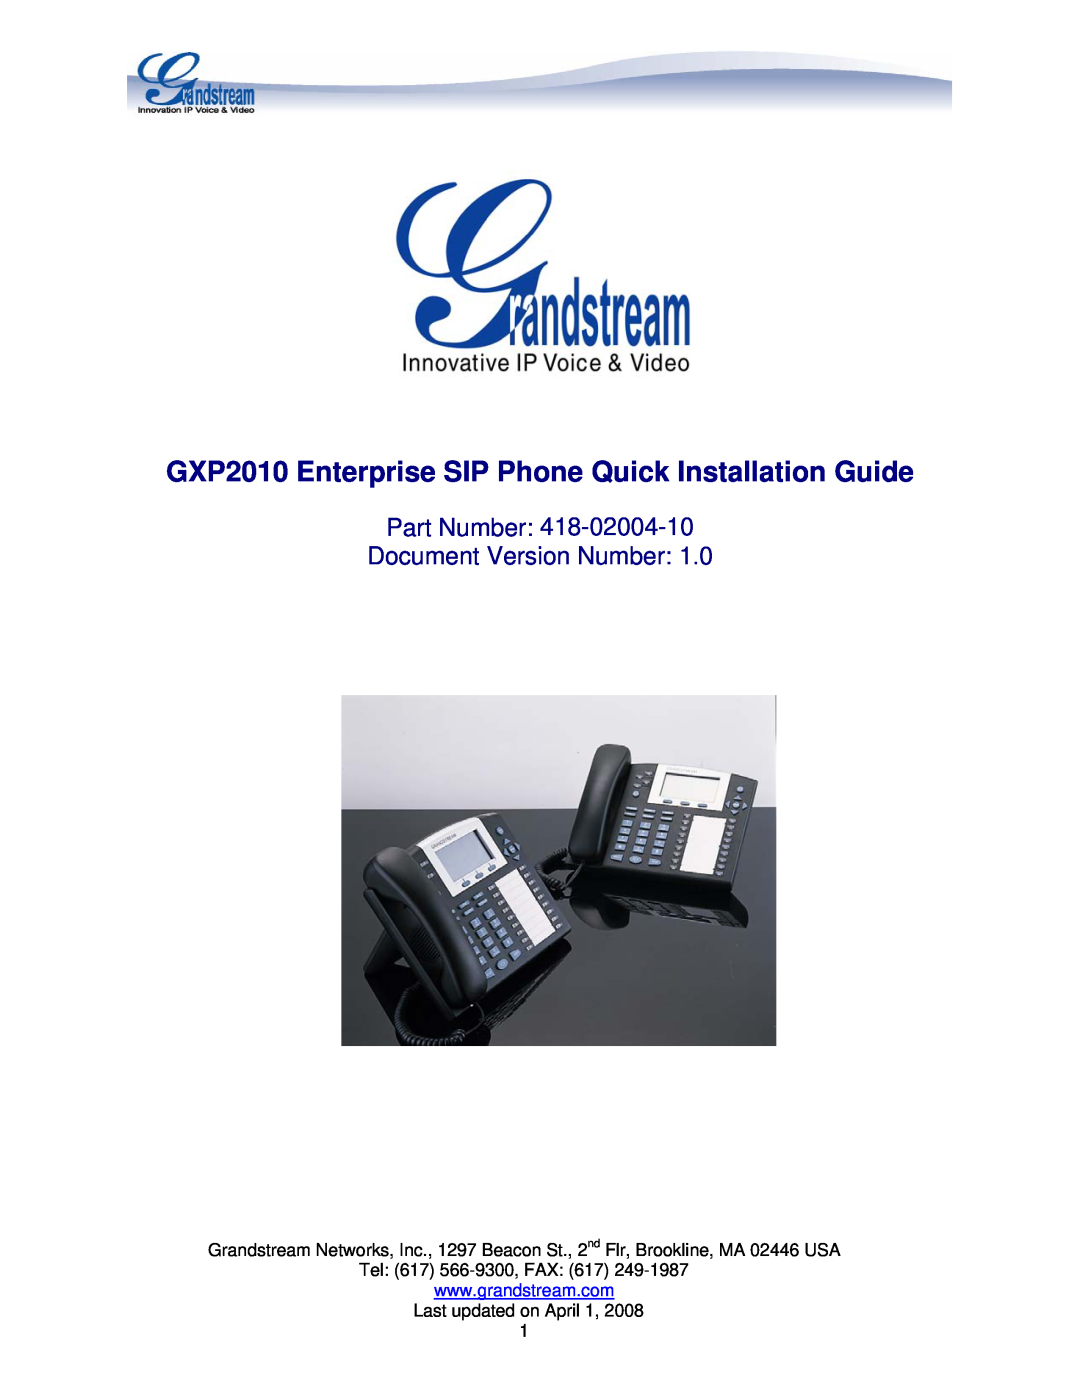 Grandstream Networks manual GXP2010 Enterprise SIP Phone Quick Installation Guide, Part Number Document Version Number 